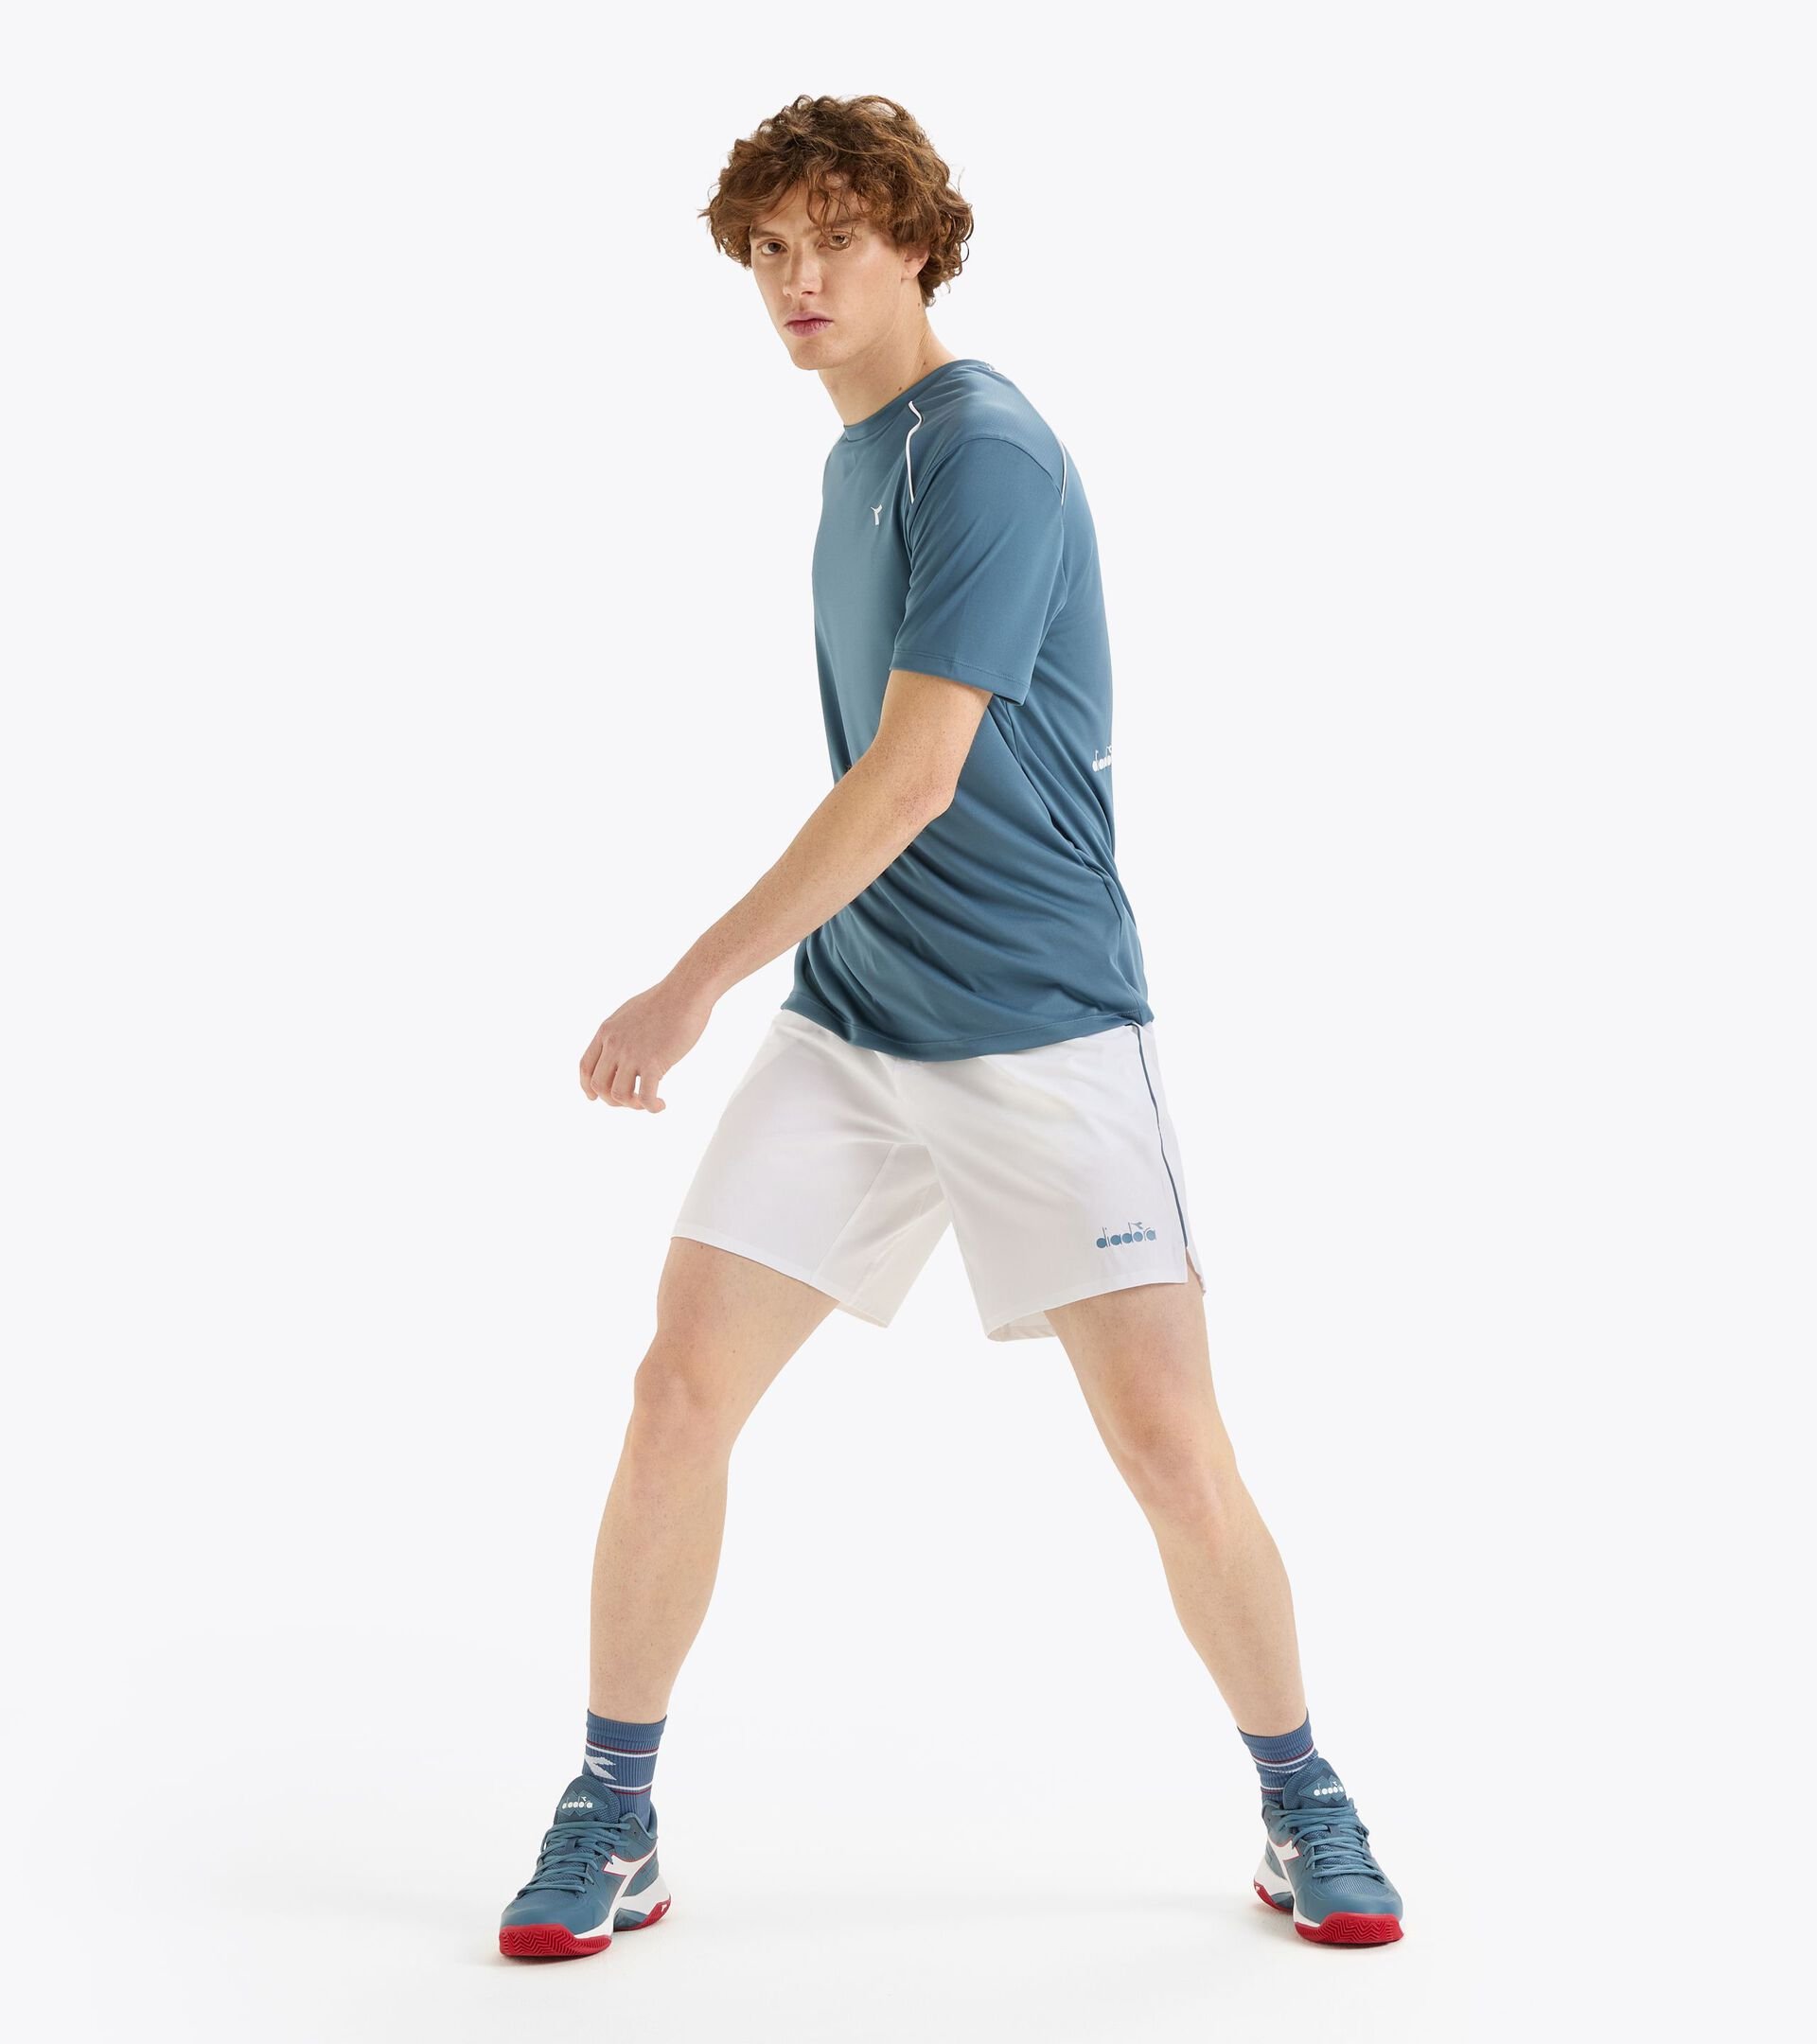 Pantalones cortos de tenis 9’’ - Hombre
 SHORTS CORE 9" BLANCO VIVO - Diadora